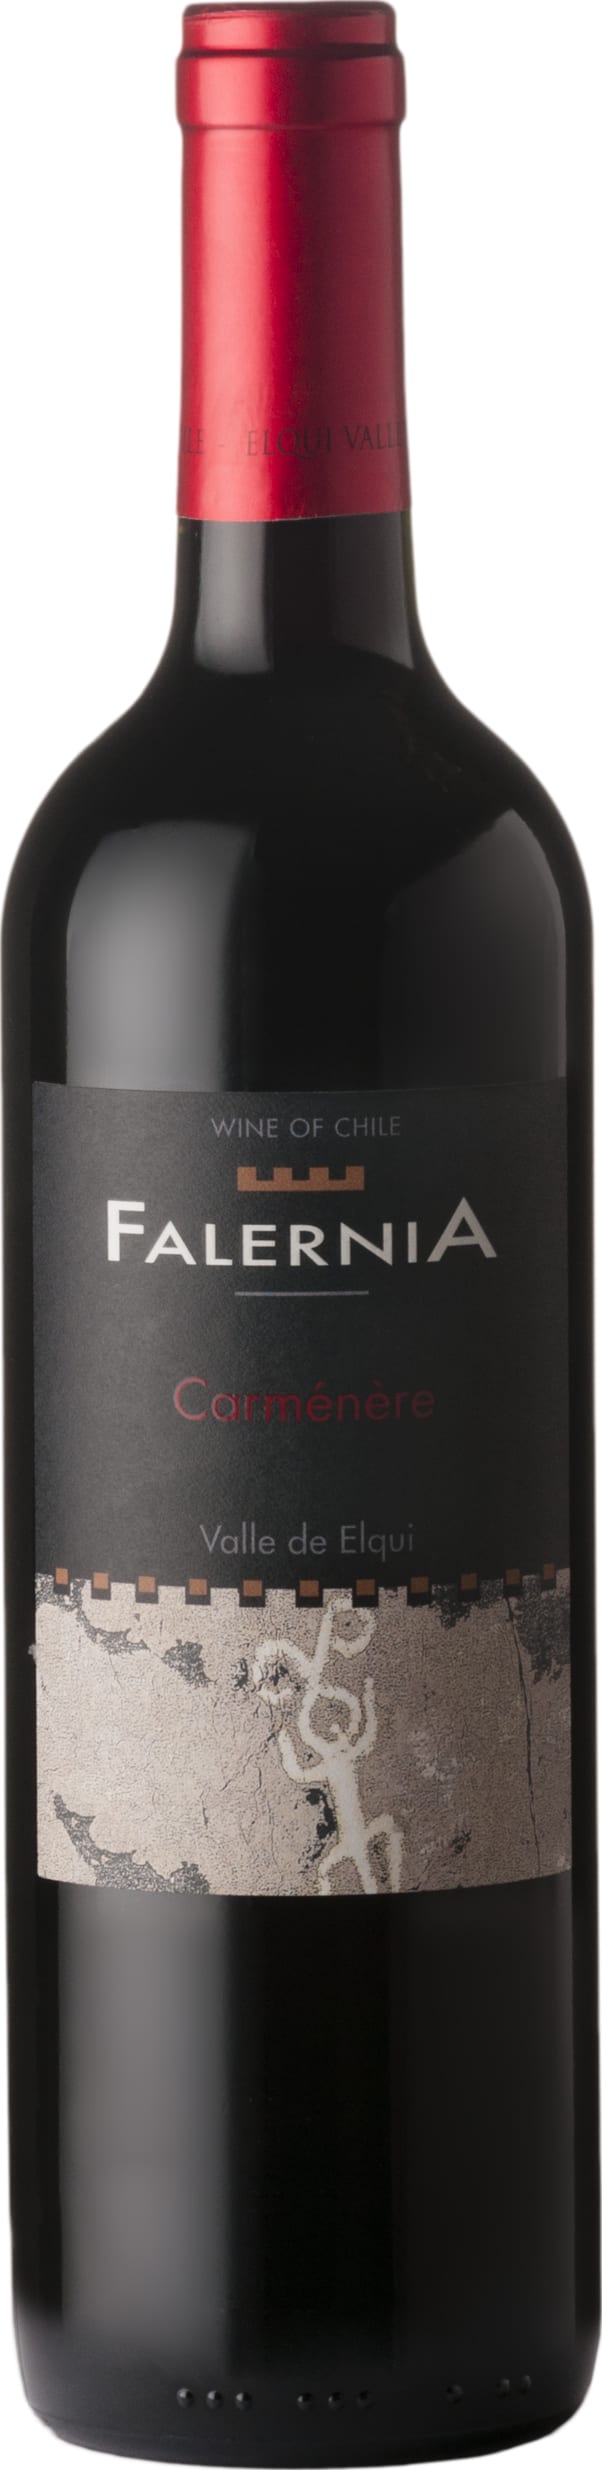 Vina Falernia Carmenere Reserva 2019 75cl - Buy Vina Falernia Wines from GREAT WINES DIRECT wine shop